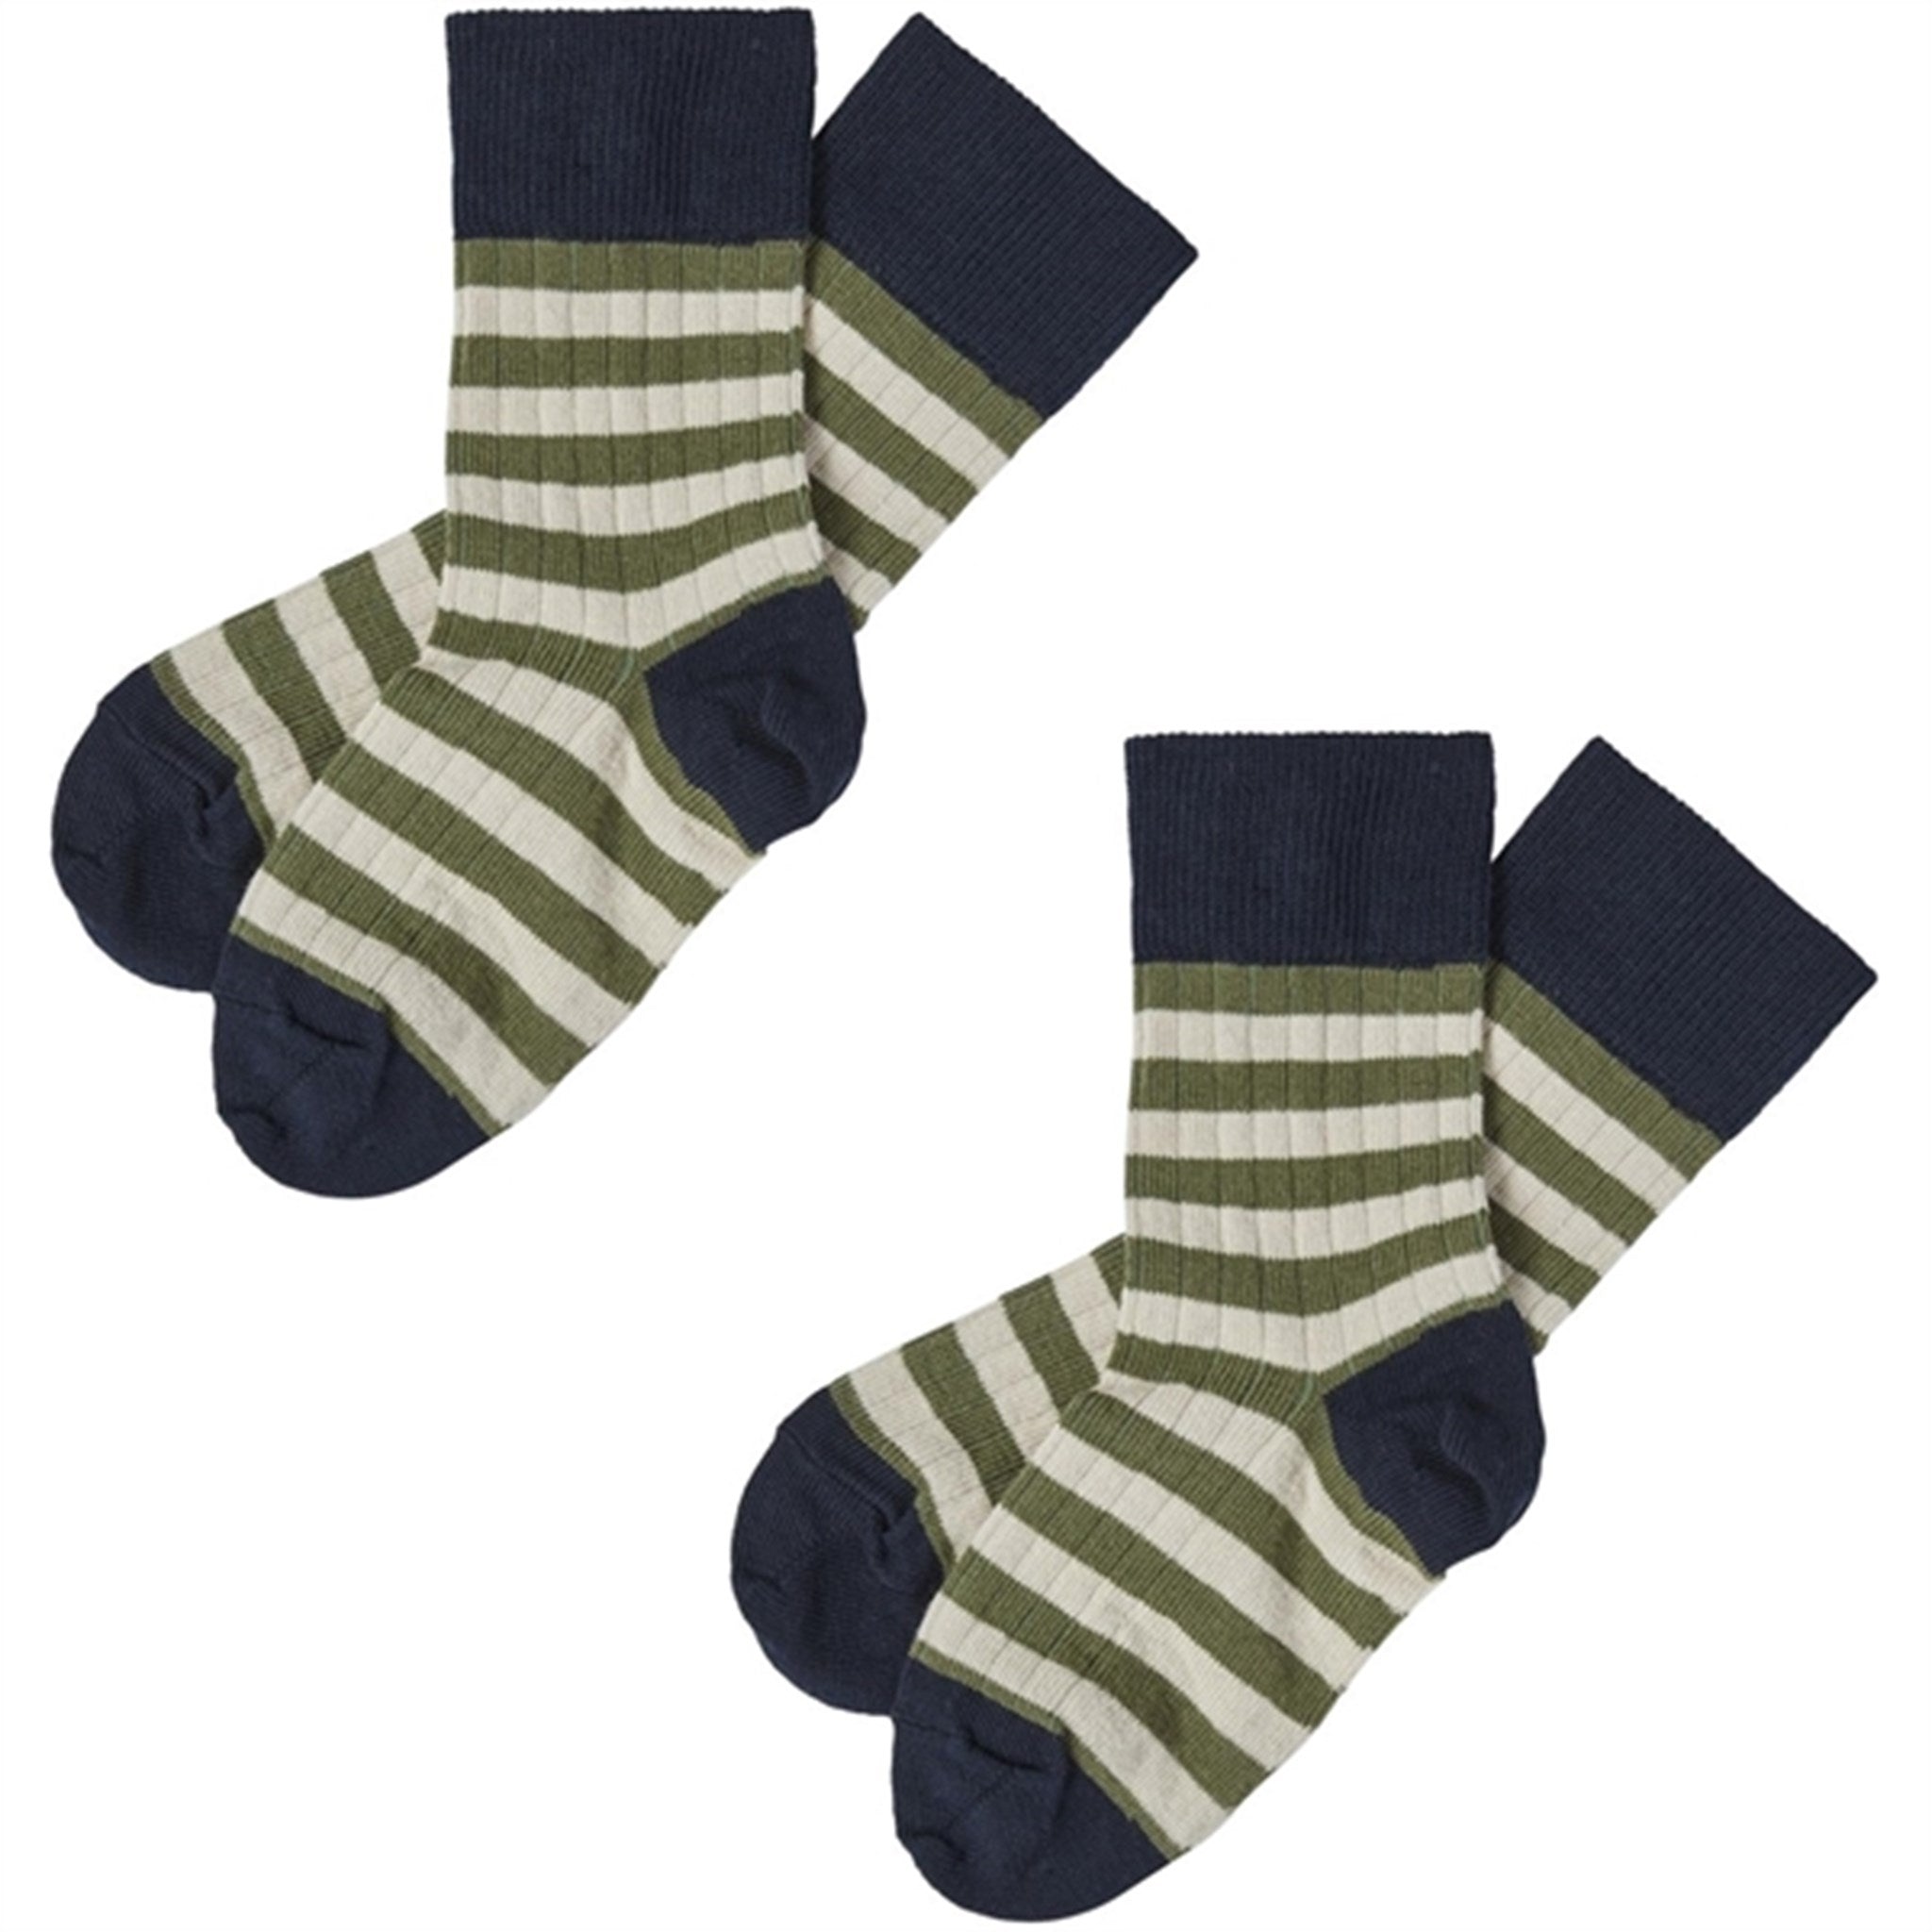 FUB Dark Navy/Olive 2-pack Classic Striped Socks